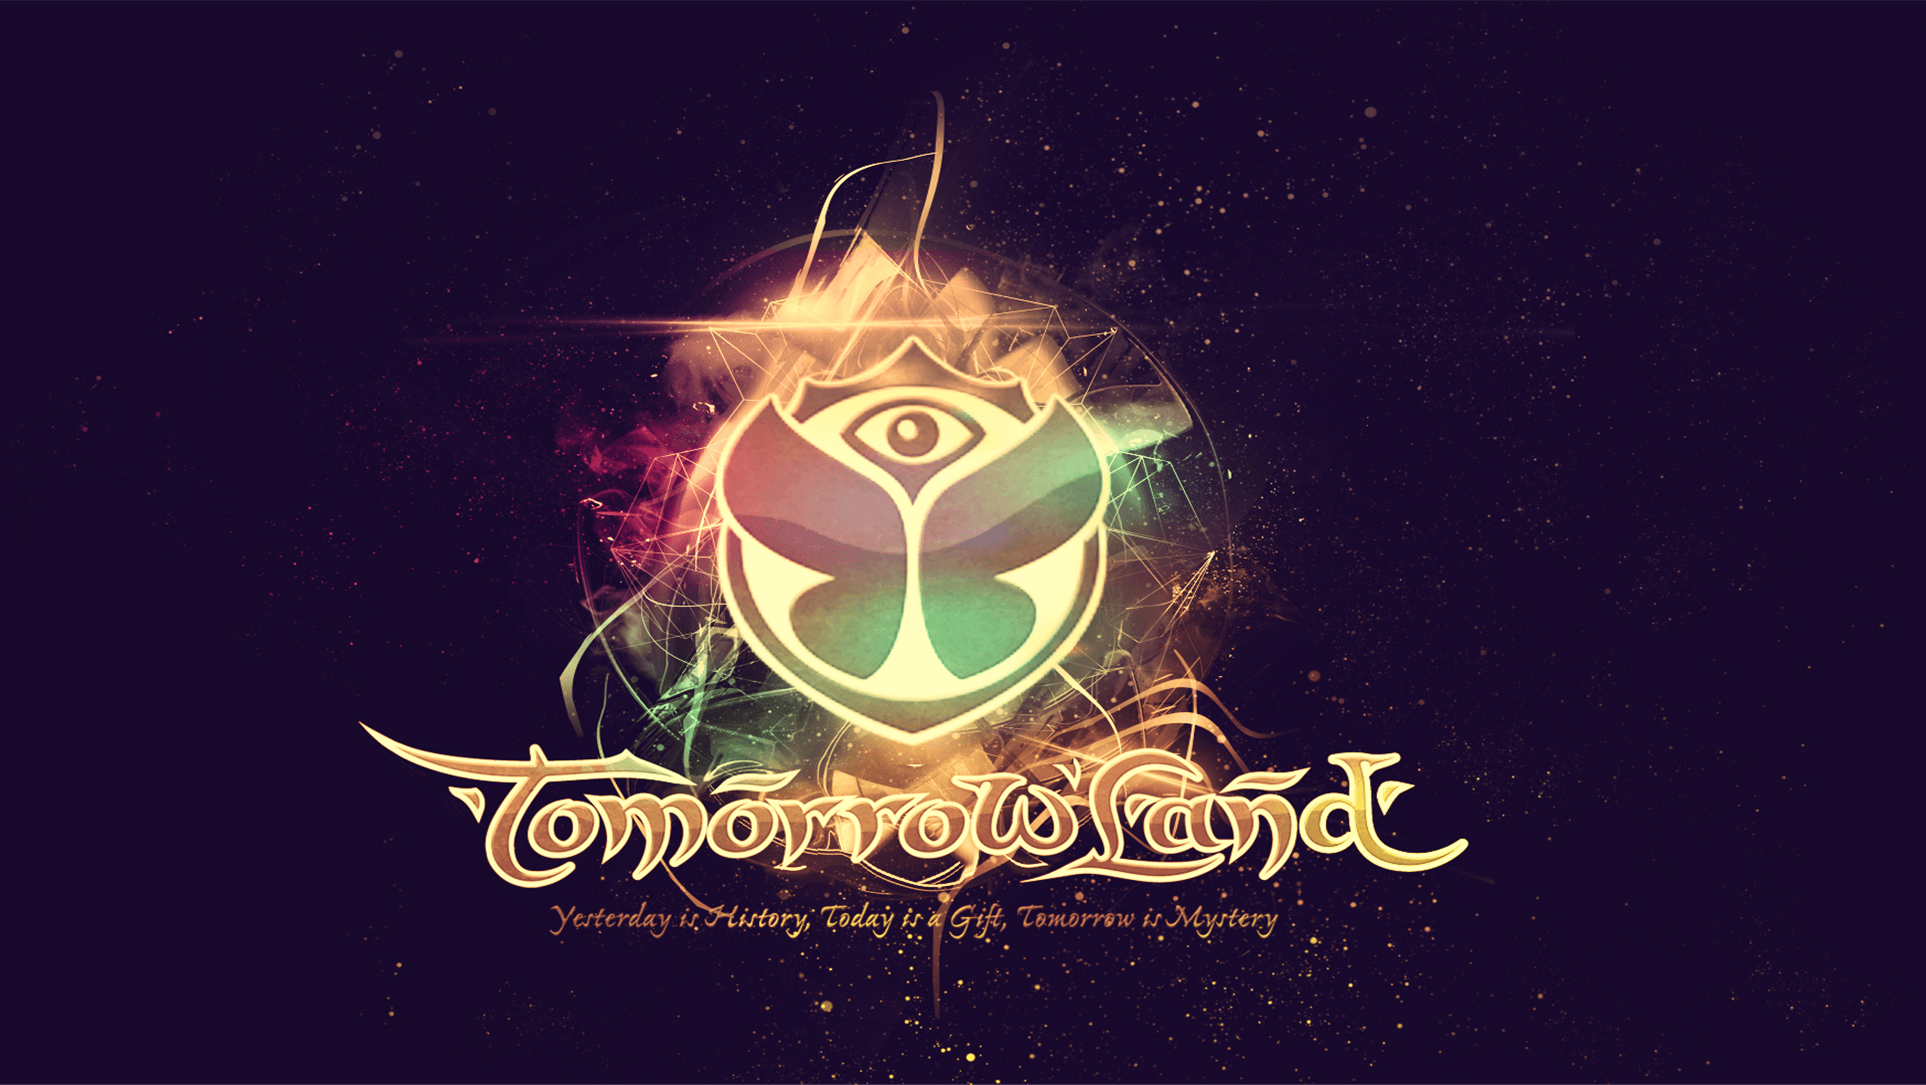 Tomorrowland Logo - Tomorrowland 2014 Belgium Electronic Music Festival Logo Free